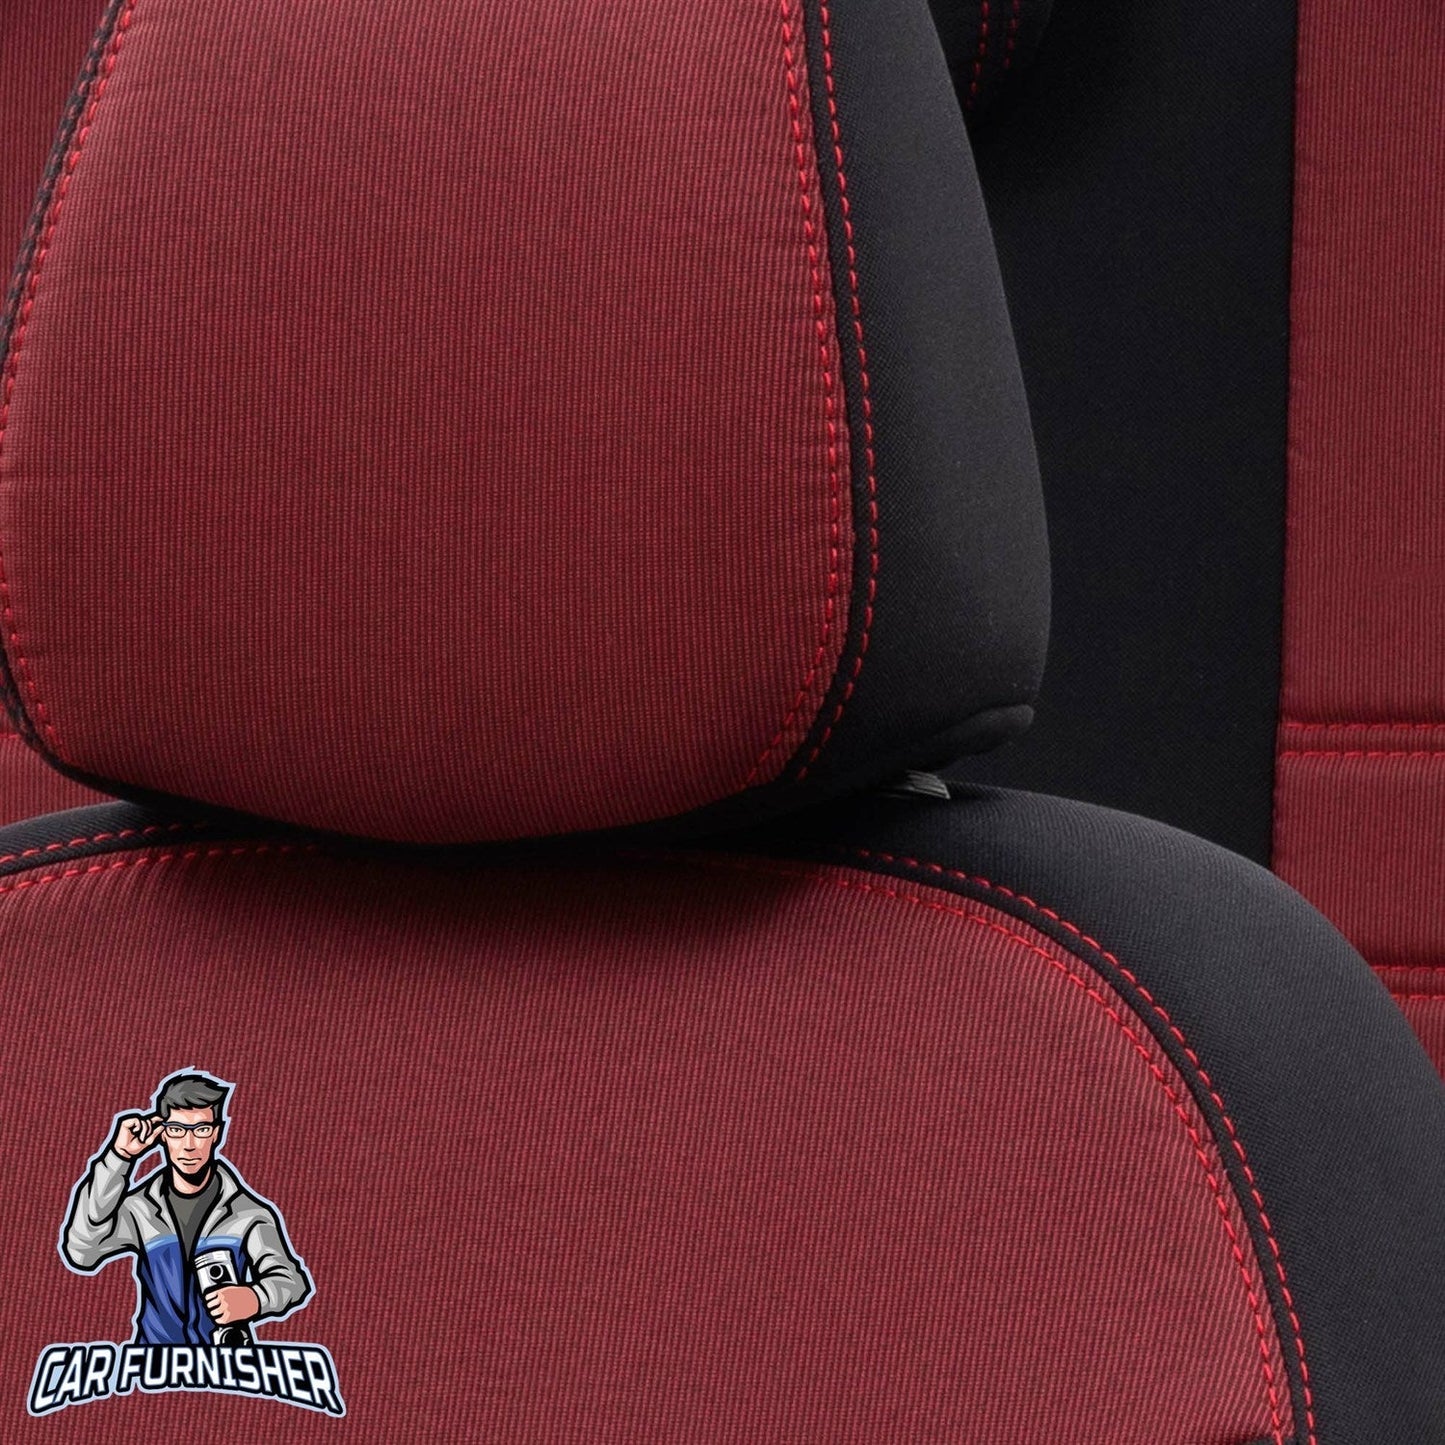 Fiat Marea Seat Covers Original Jacquard Design Red Jacquard Fabric